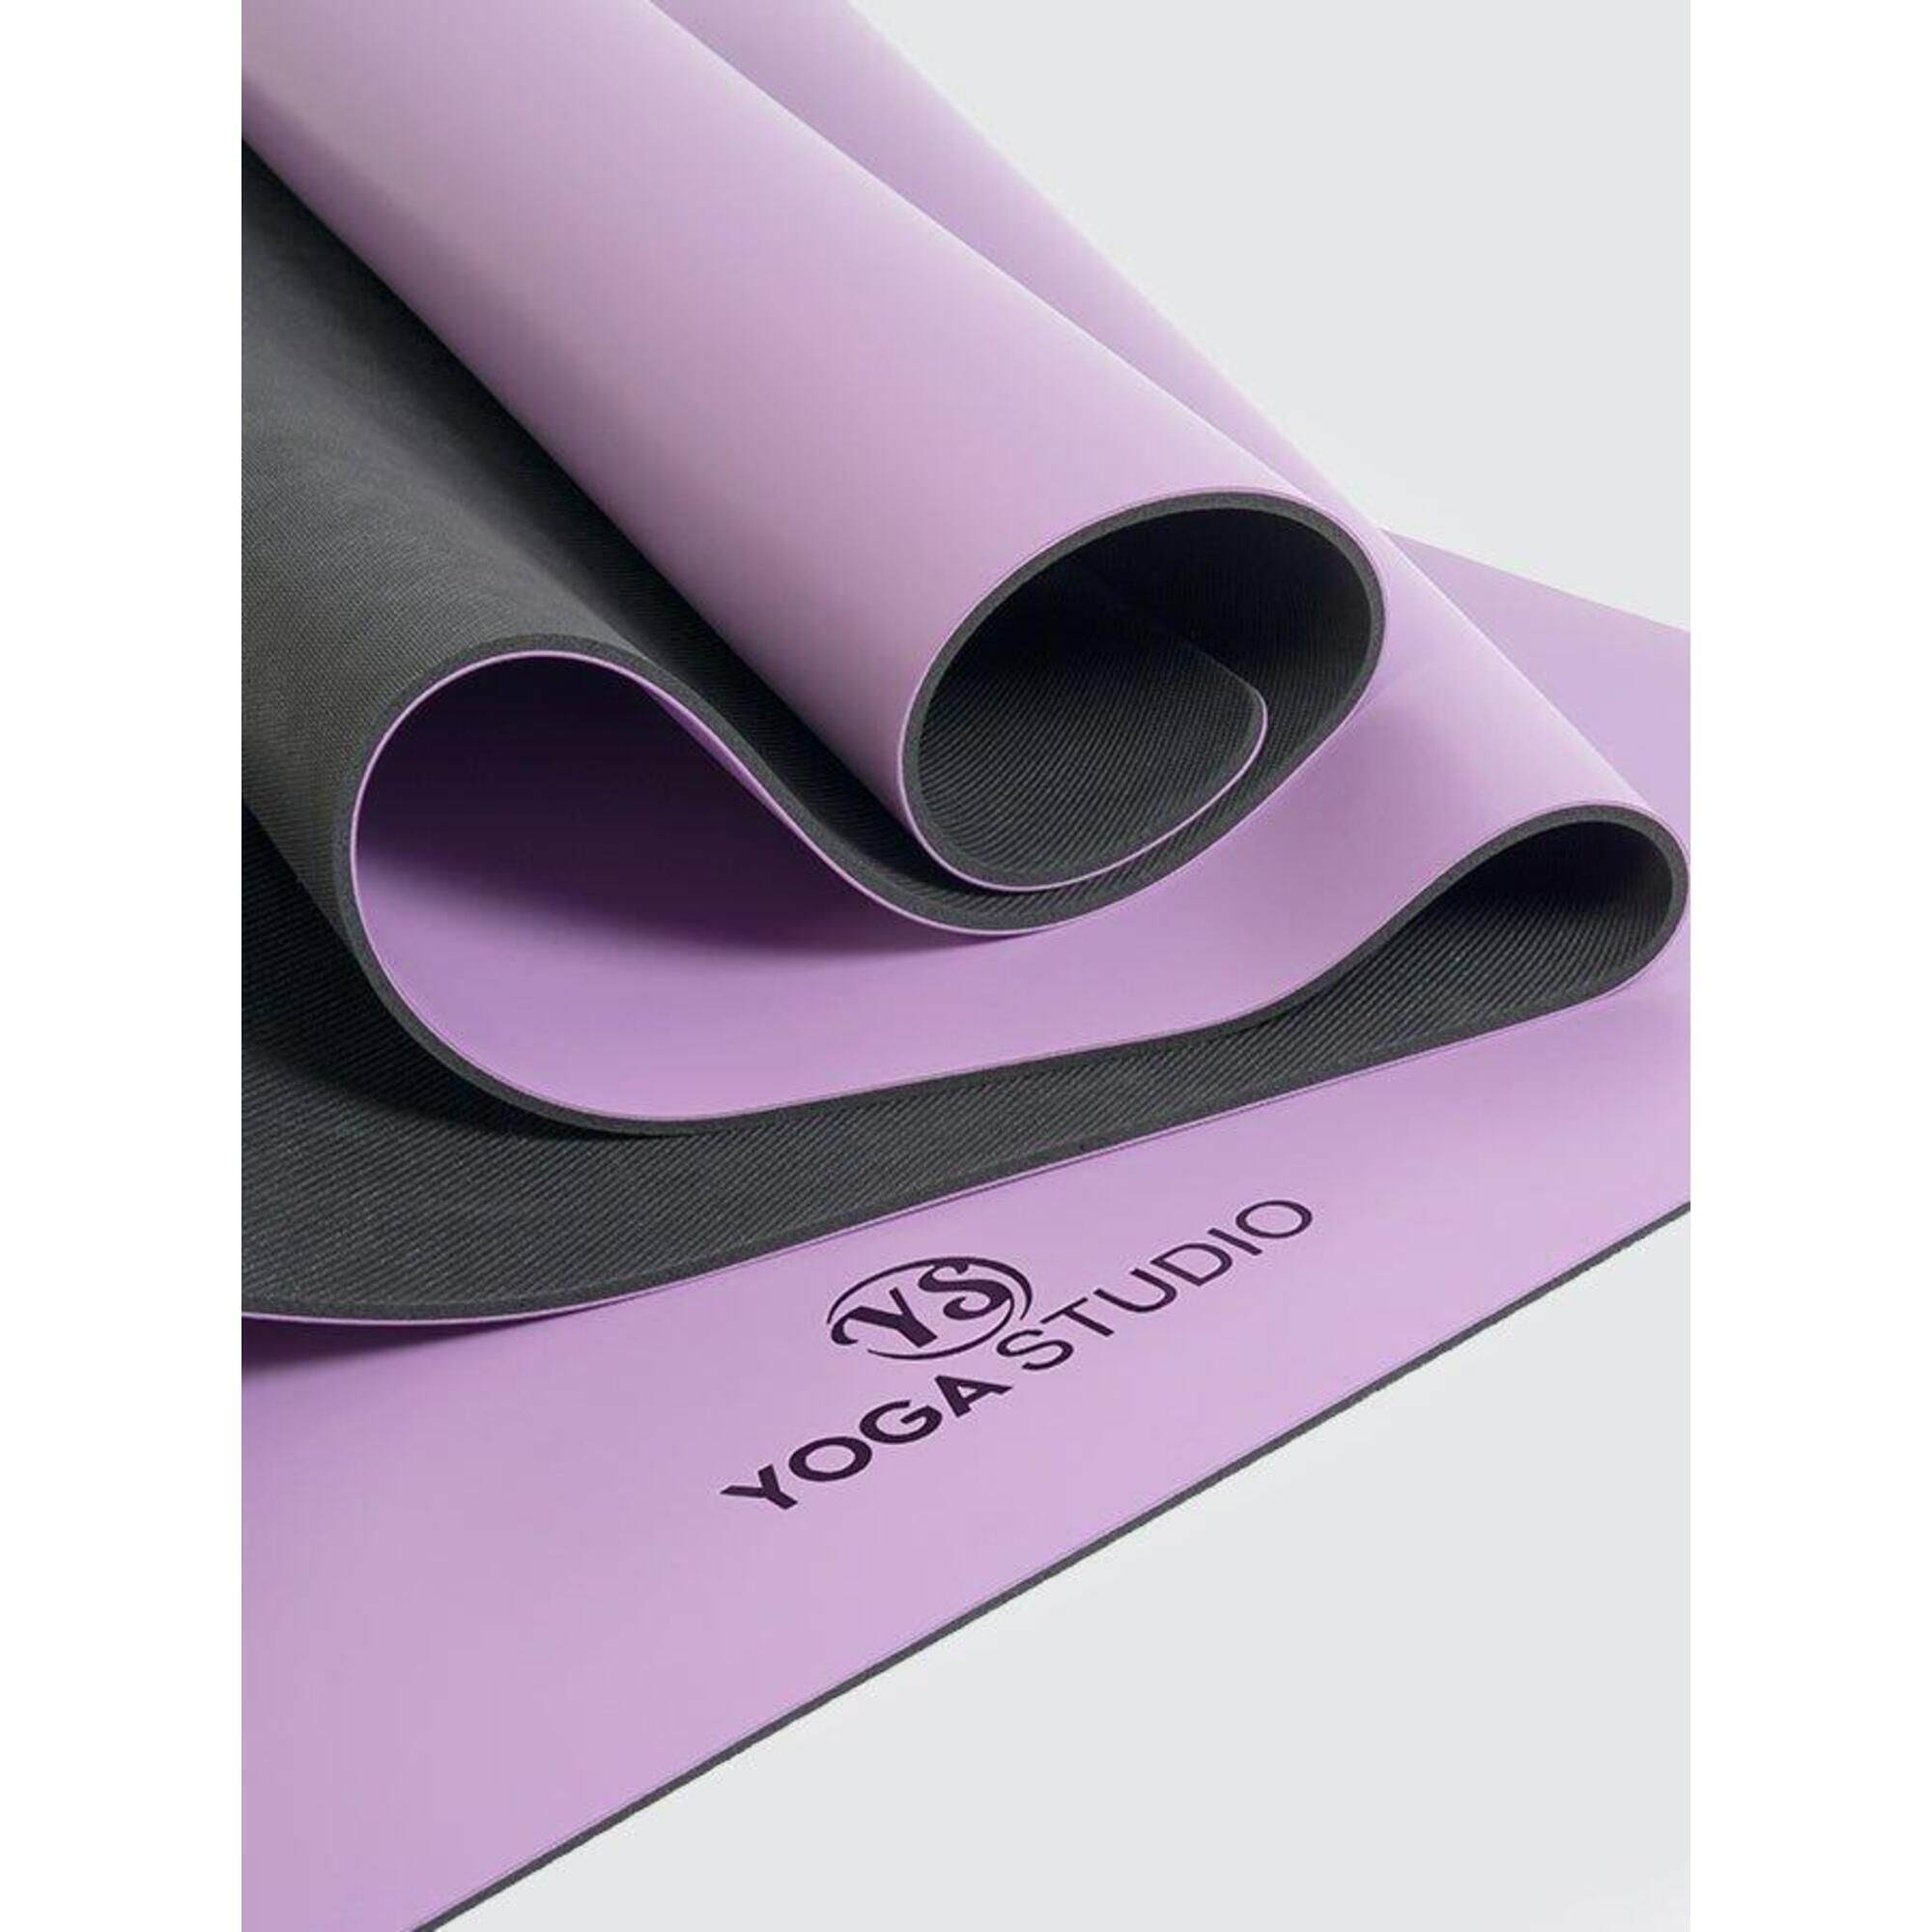 YOGA STUDIO Yoga Studio The Grip Compact Yoga Mat 4mm - Purple